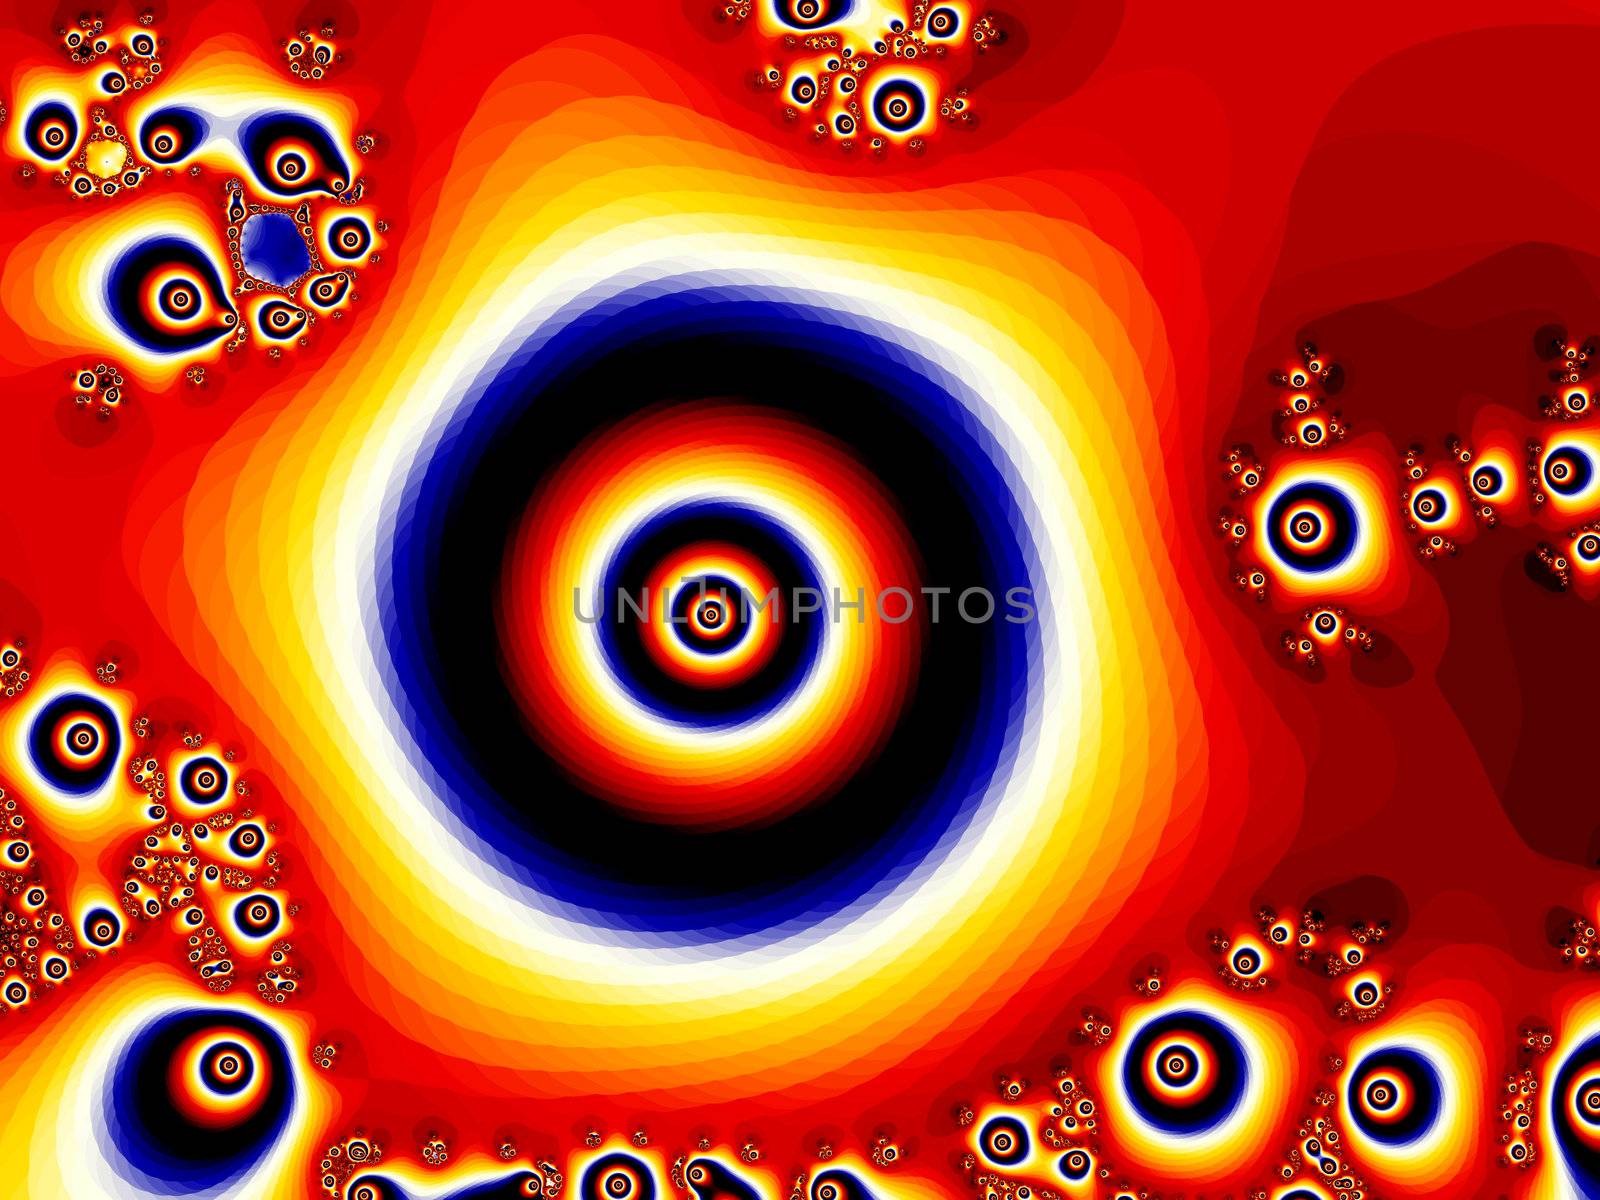 Red and Orange Eye Fractal Design With Strong Circles Design Illustration Background